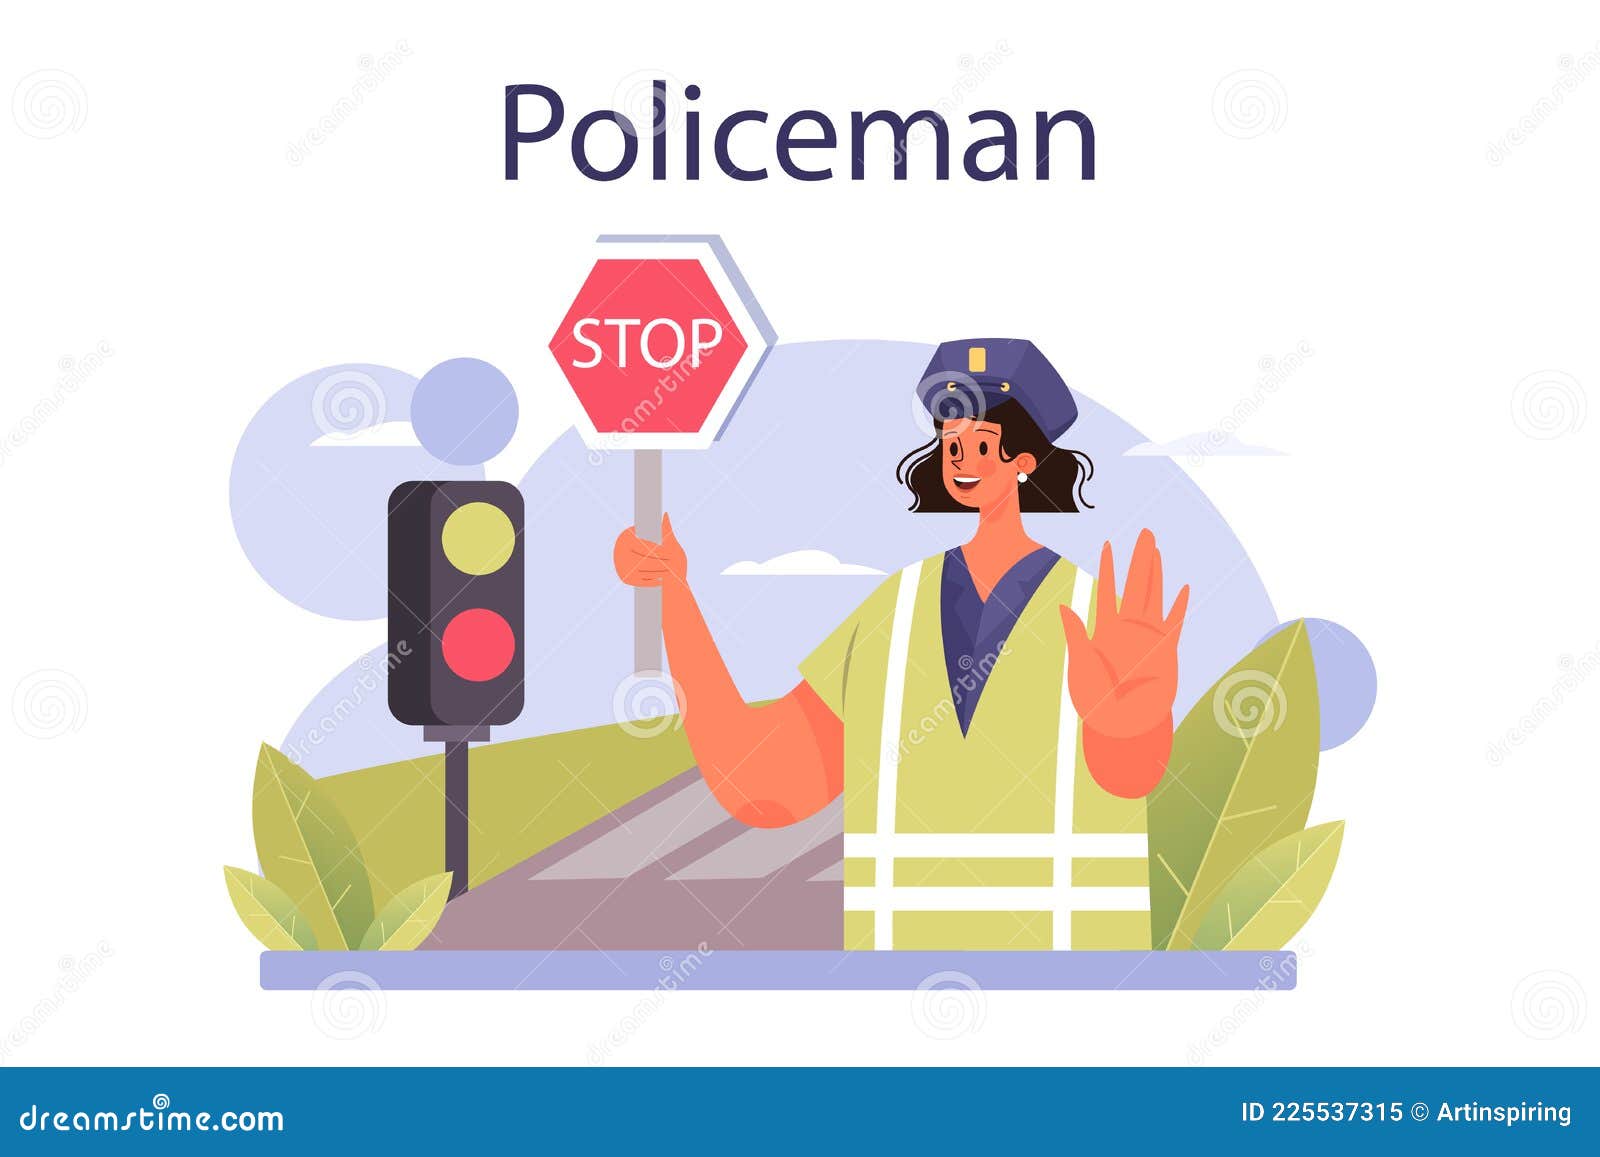 Policeman Concept Illustration 98384782